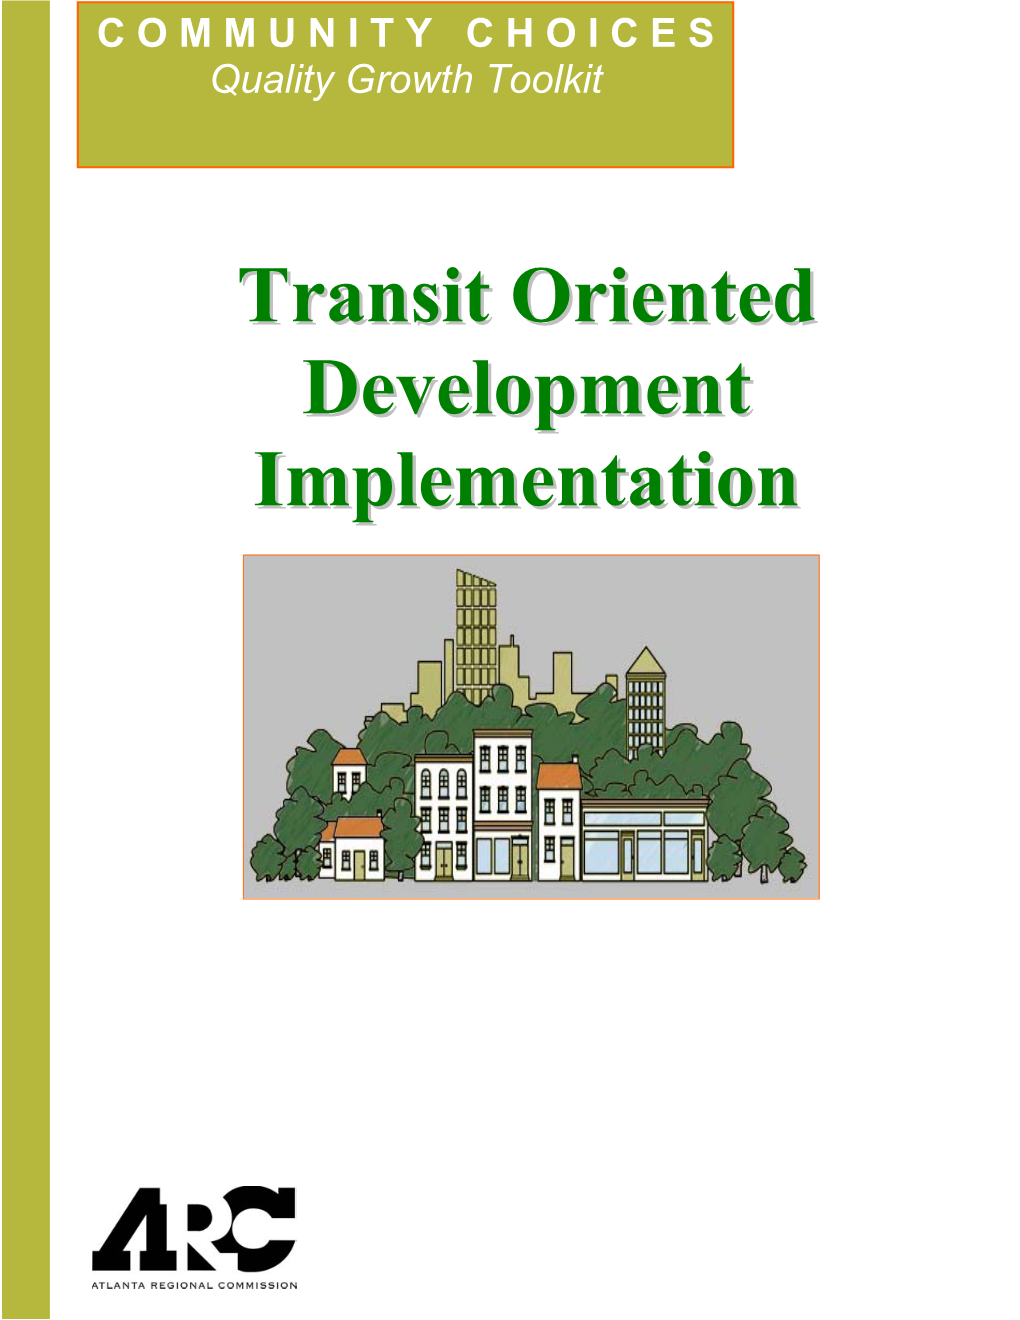 Transit Oriented Development (Tod) Implementation